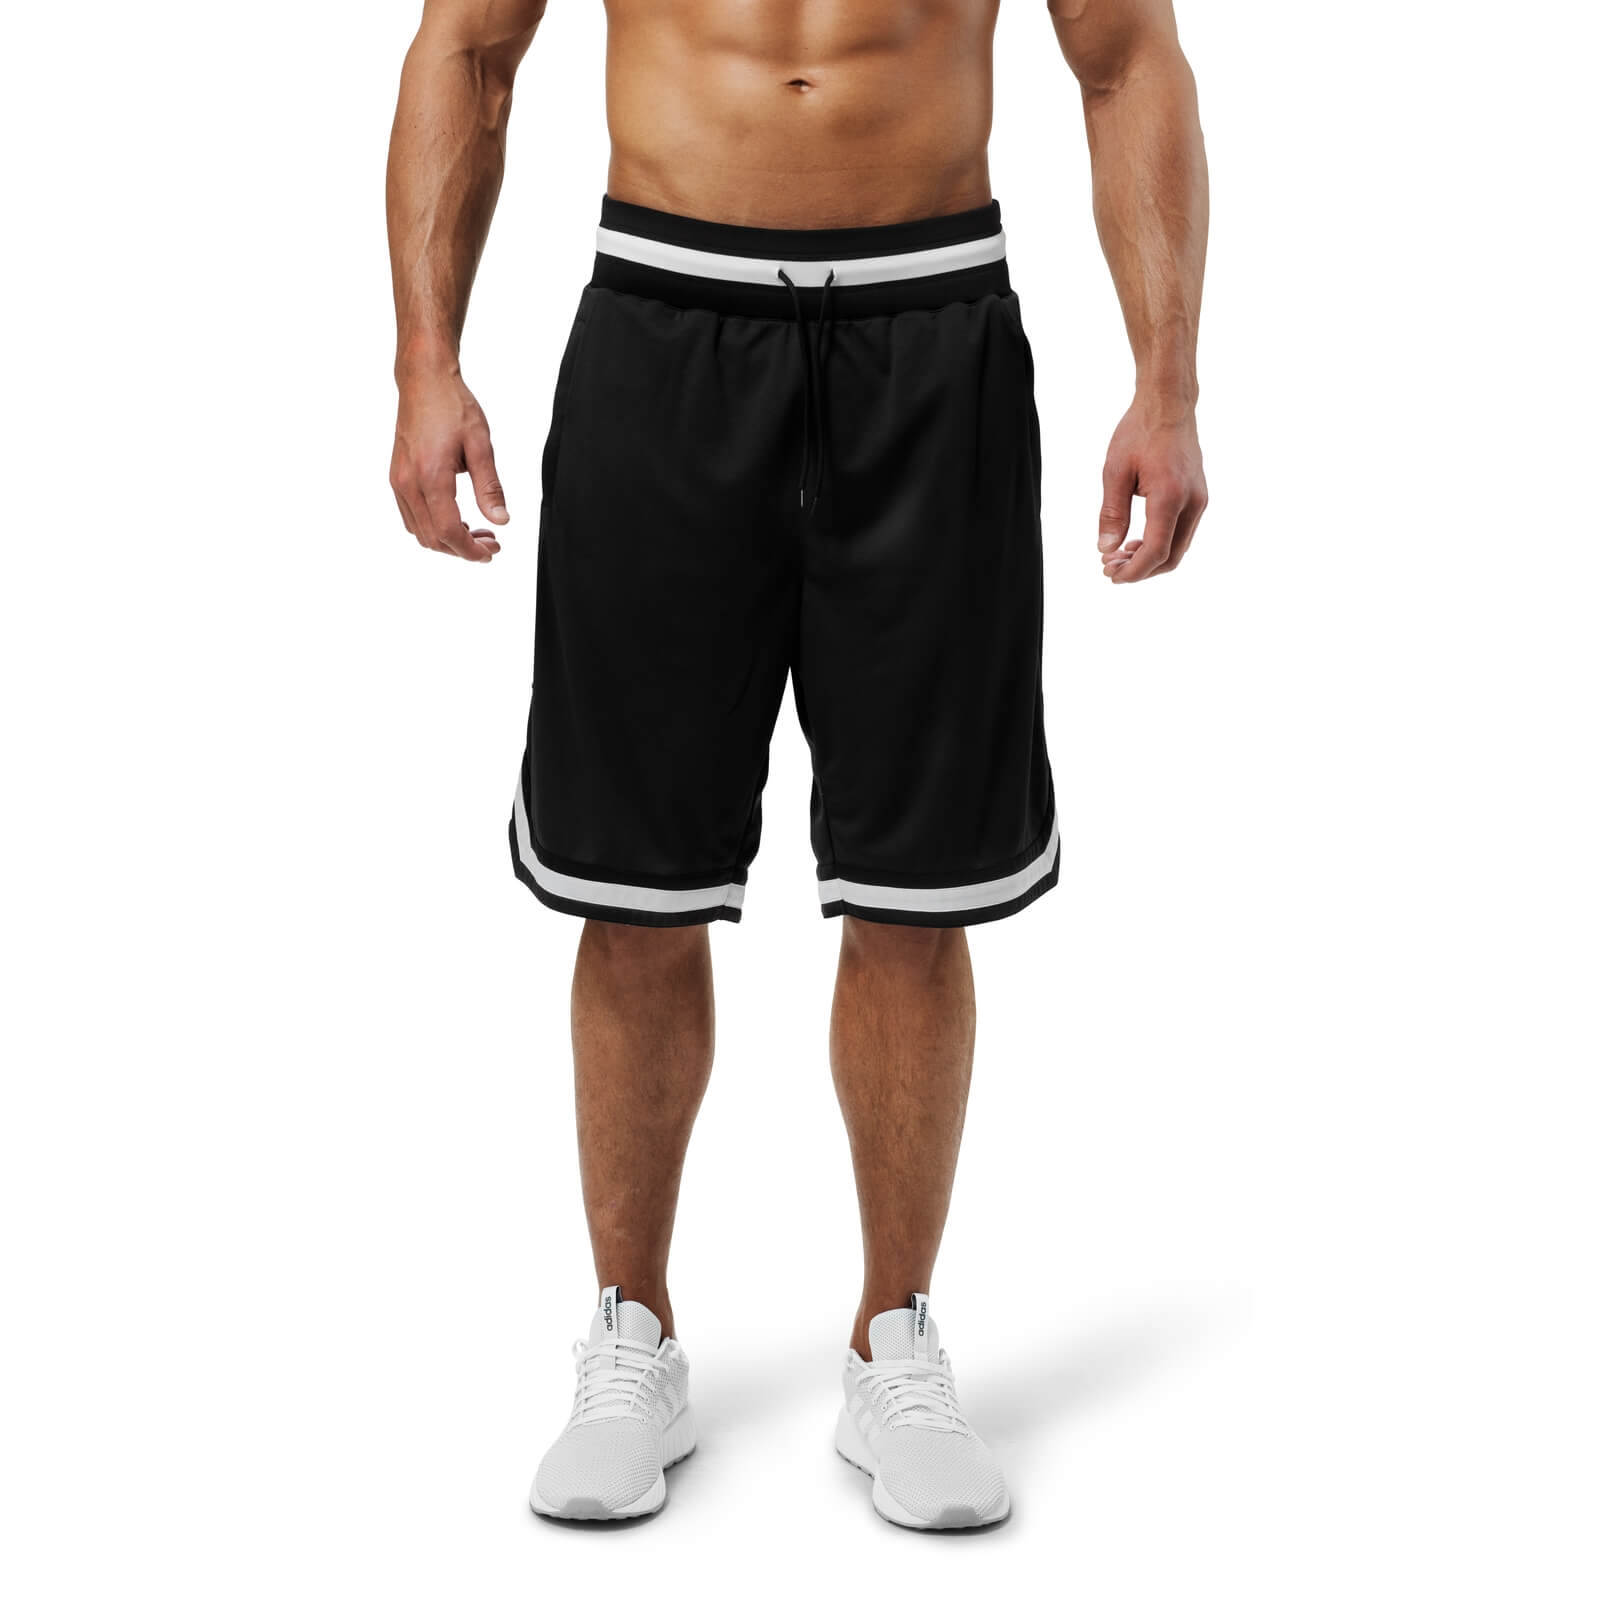 Kolla in Harlem Shorts, black, Better Bodies hos SportGymButiken.se